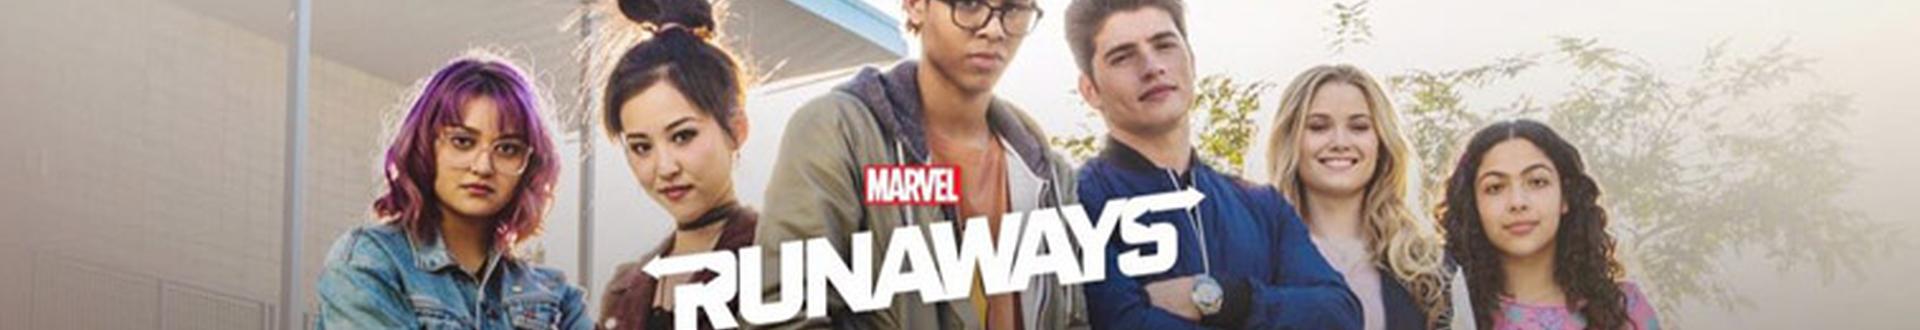 Image illustrative de Marvel's Runaways